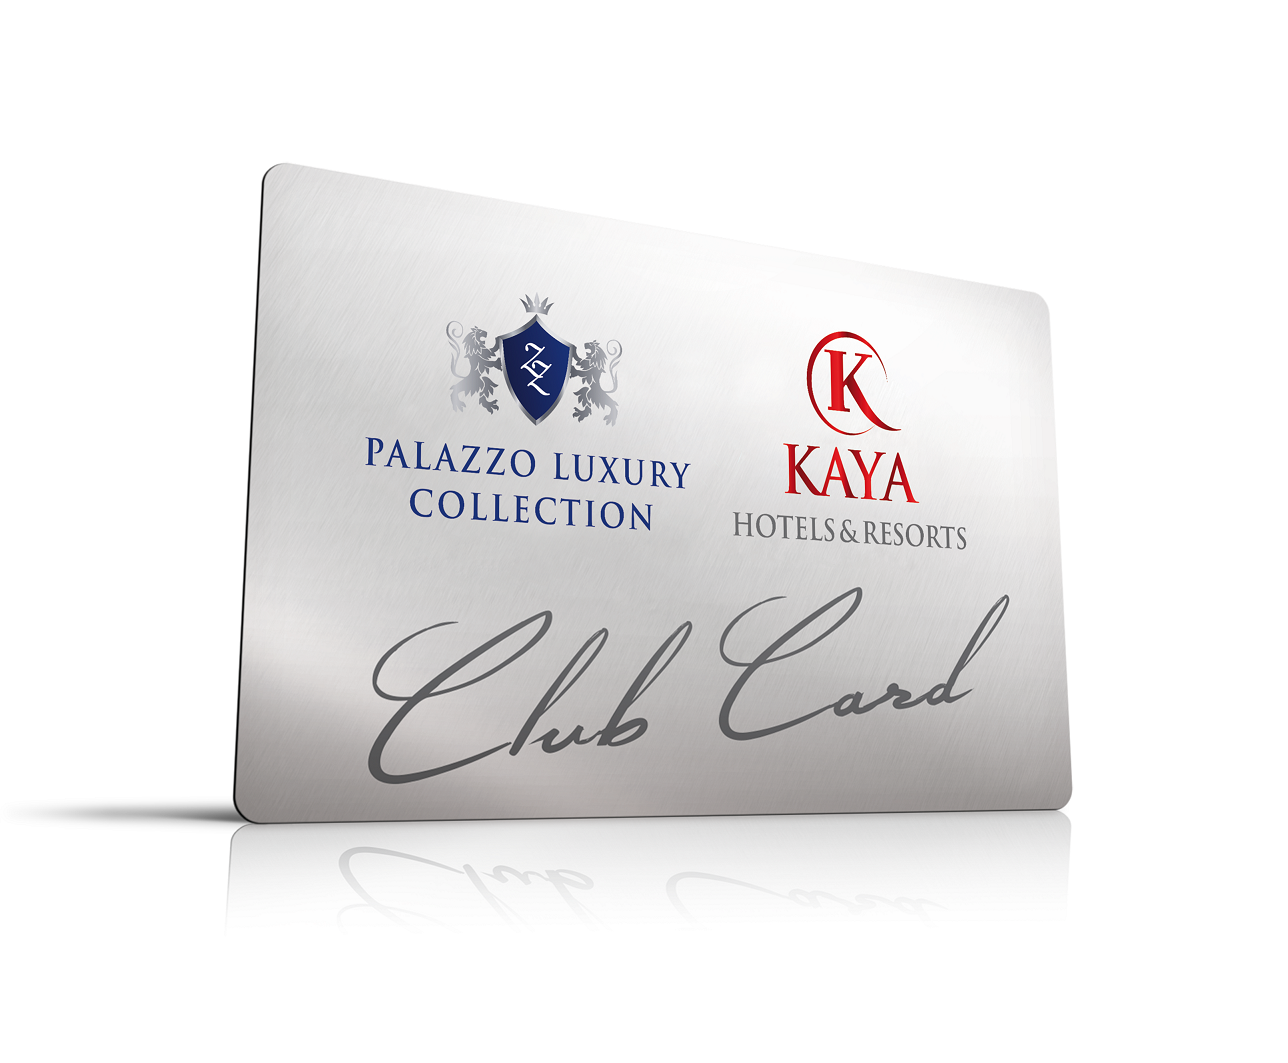 KAYA CLUB CARD